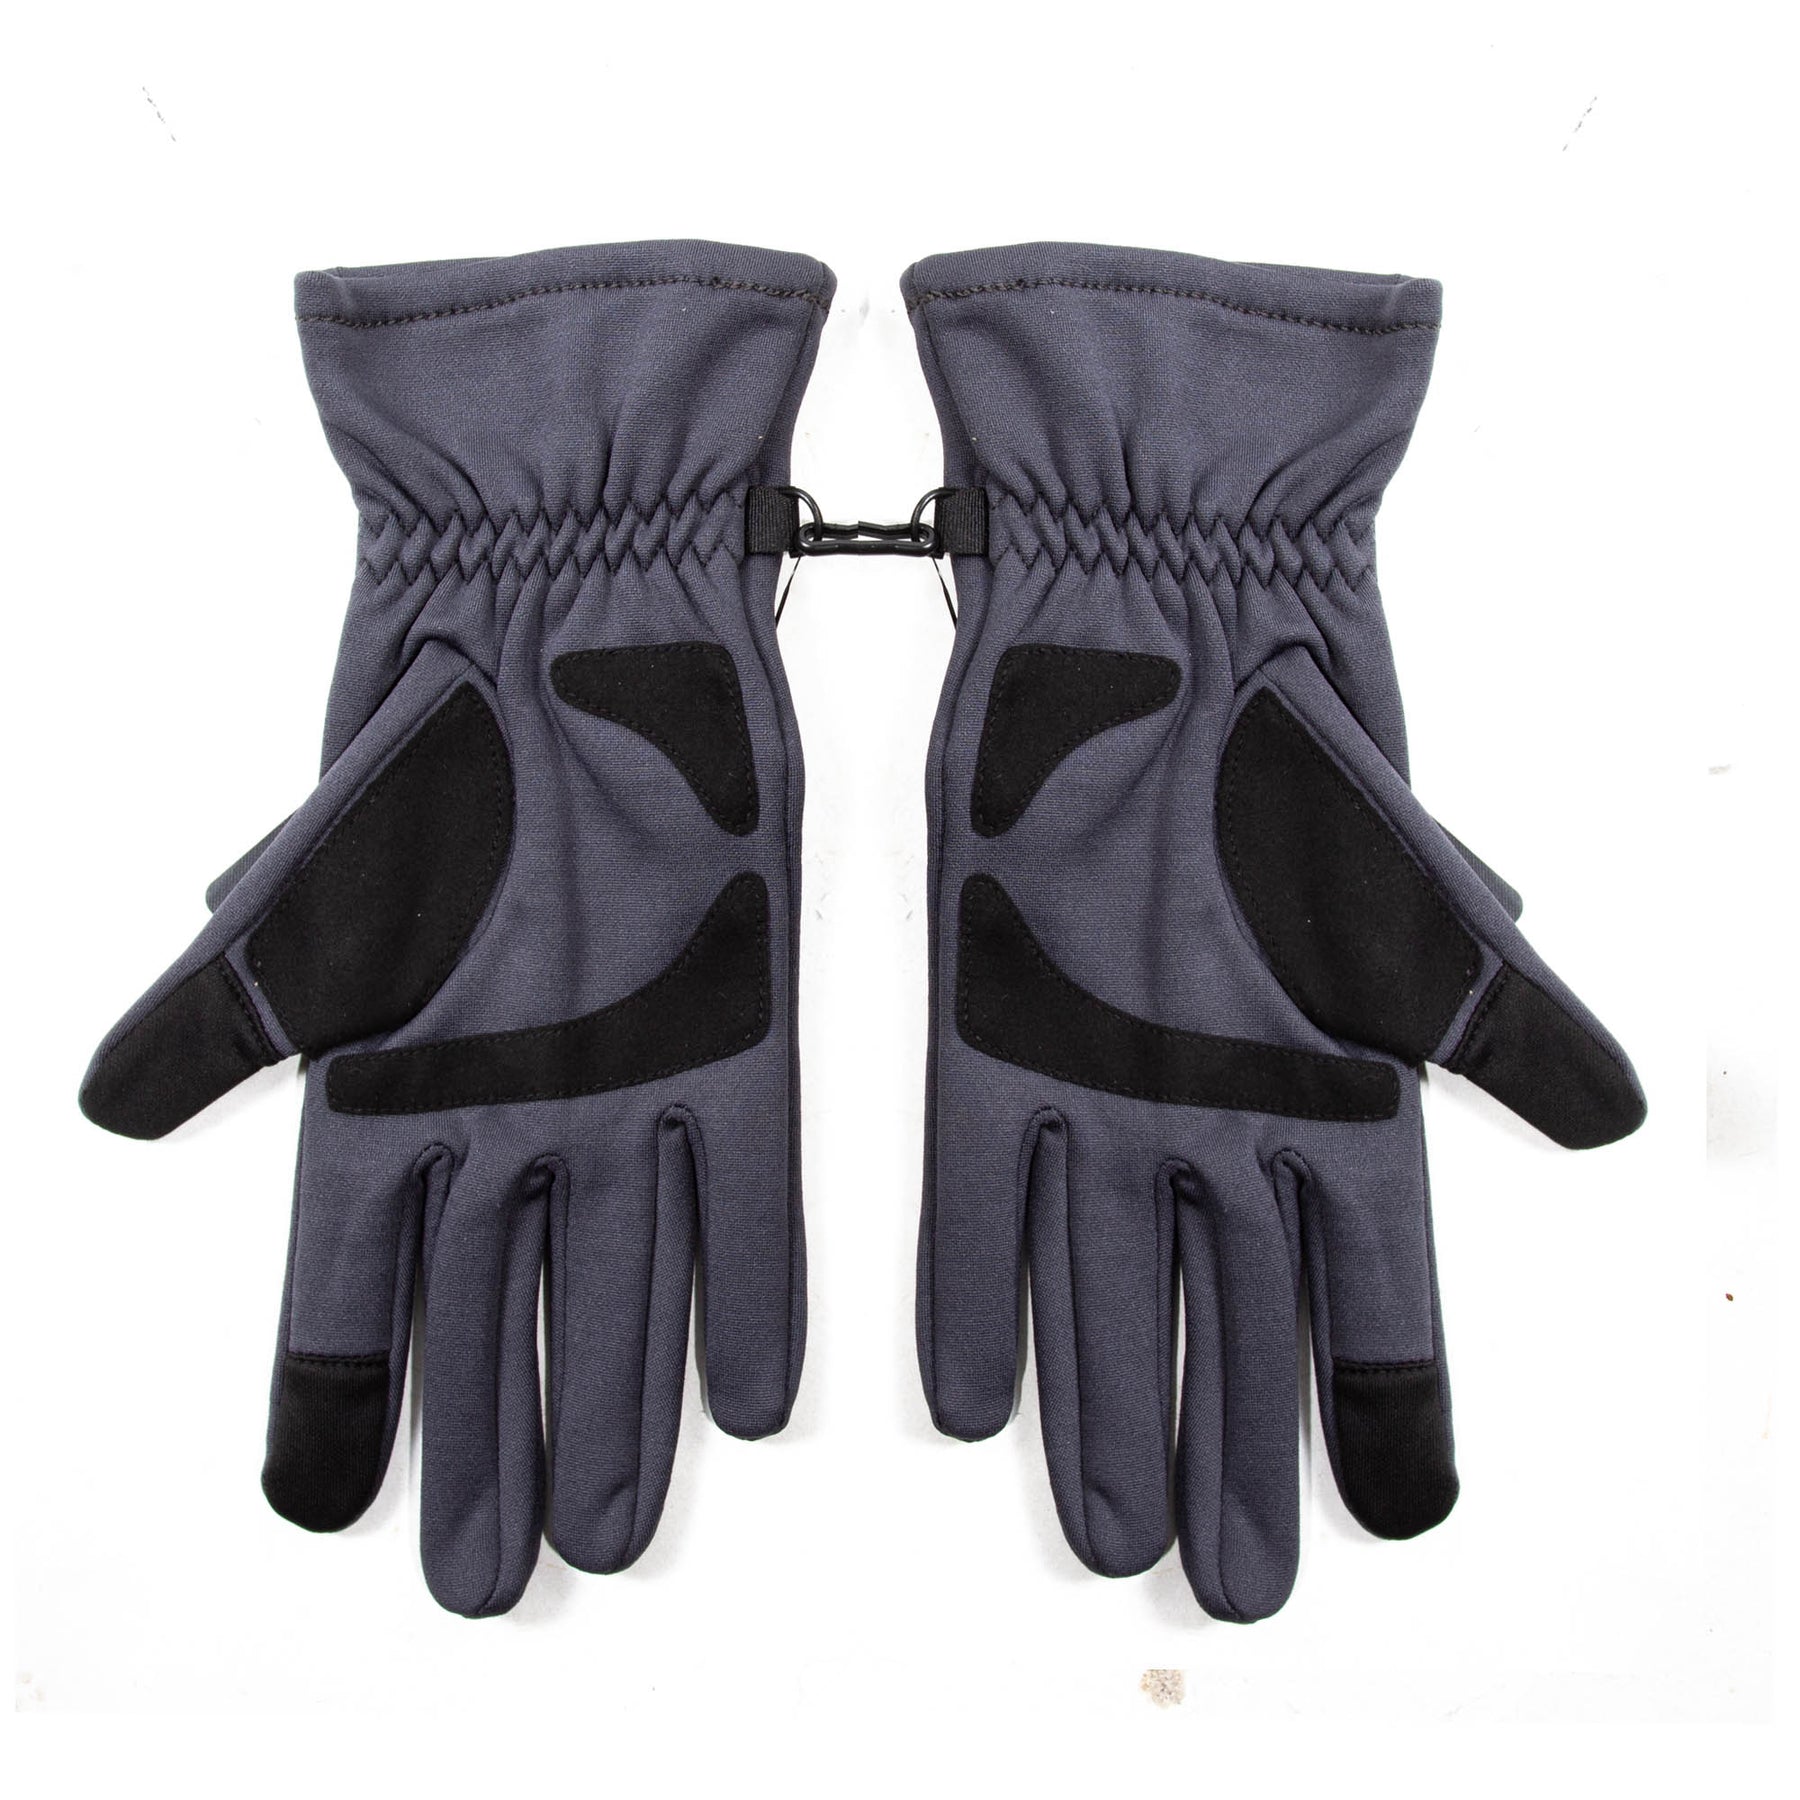 Jack Wolfskin Dynamic Touch Outdoor Gloves